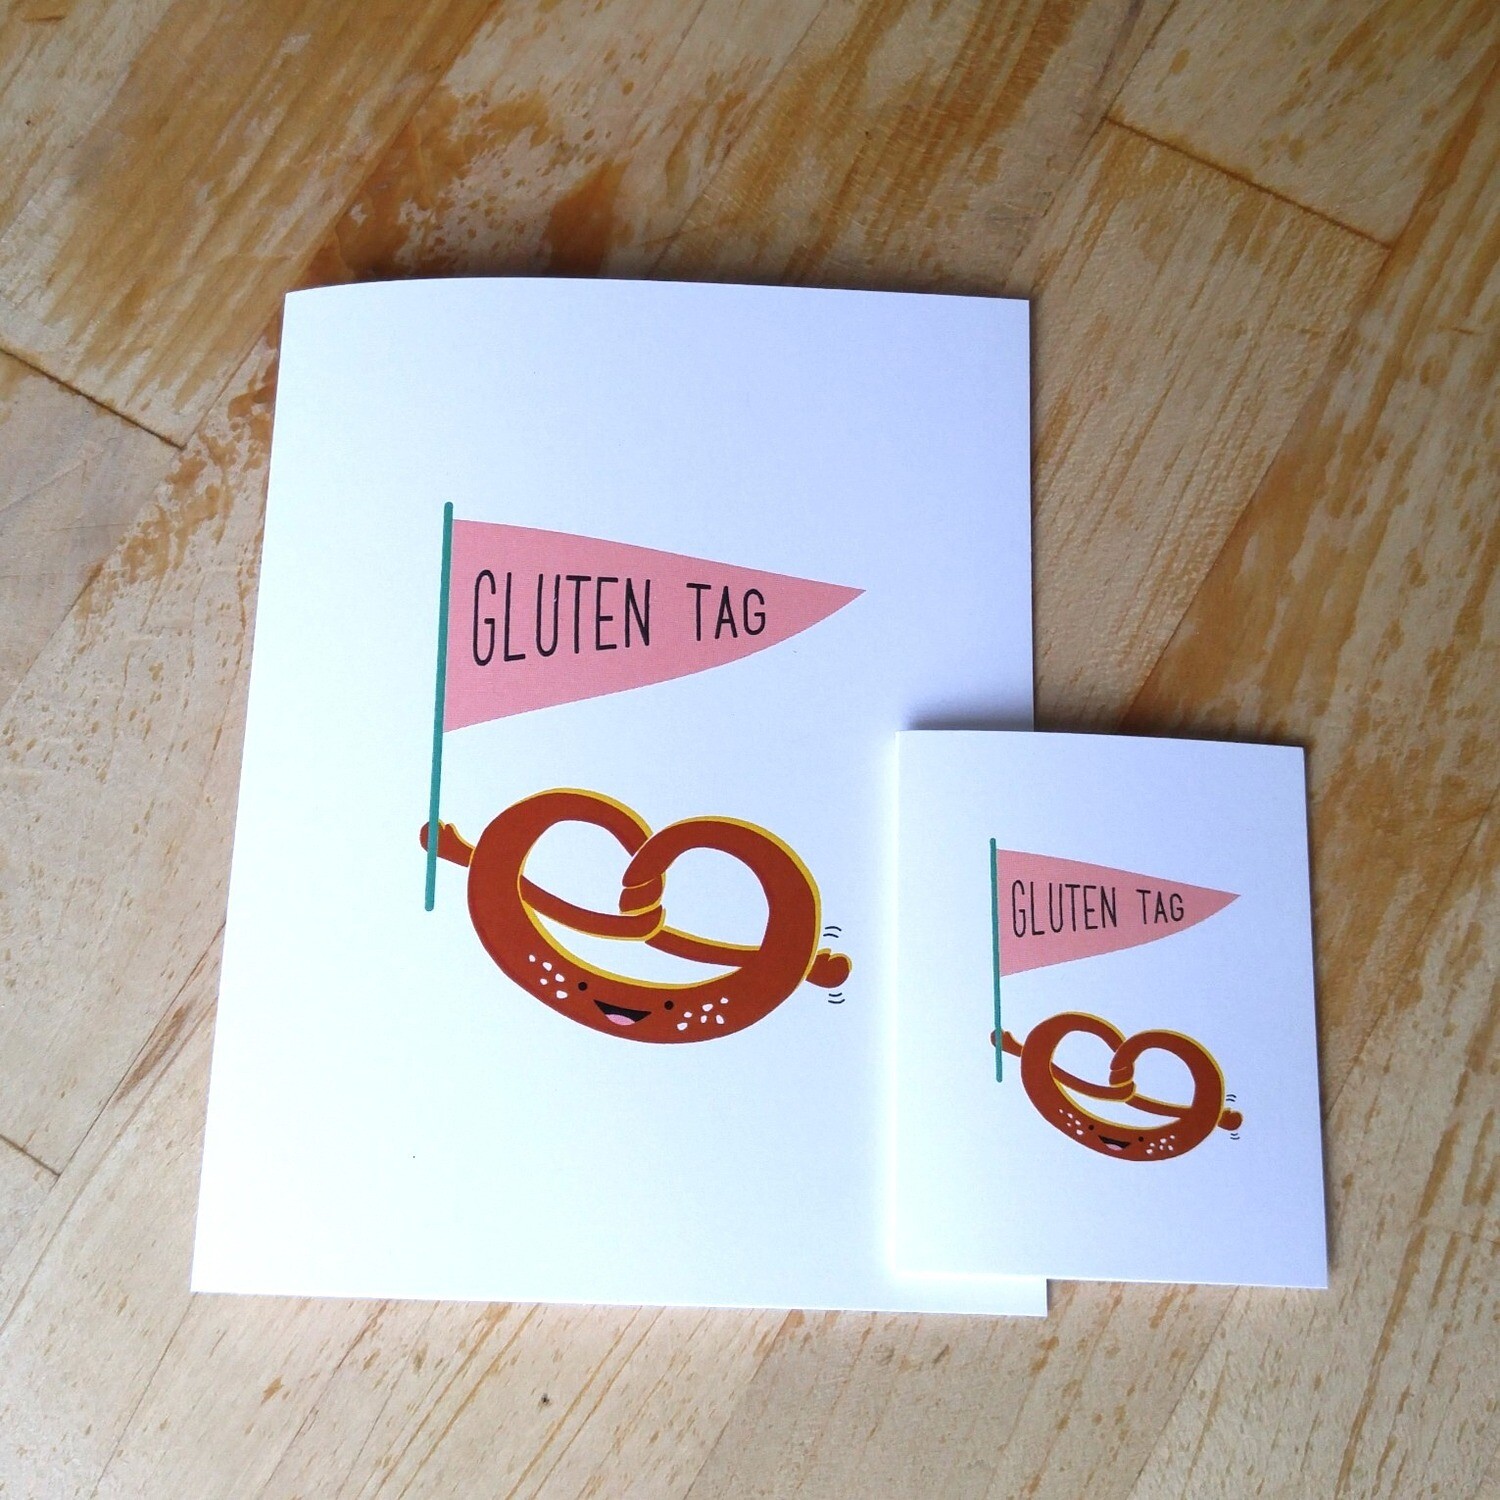 Greeting Card: "Gluten Tag"